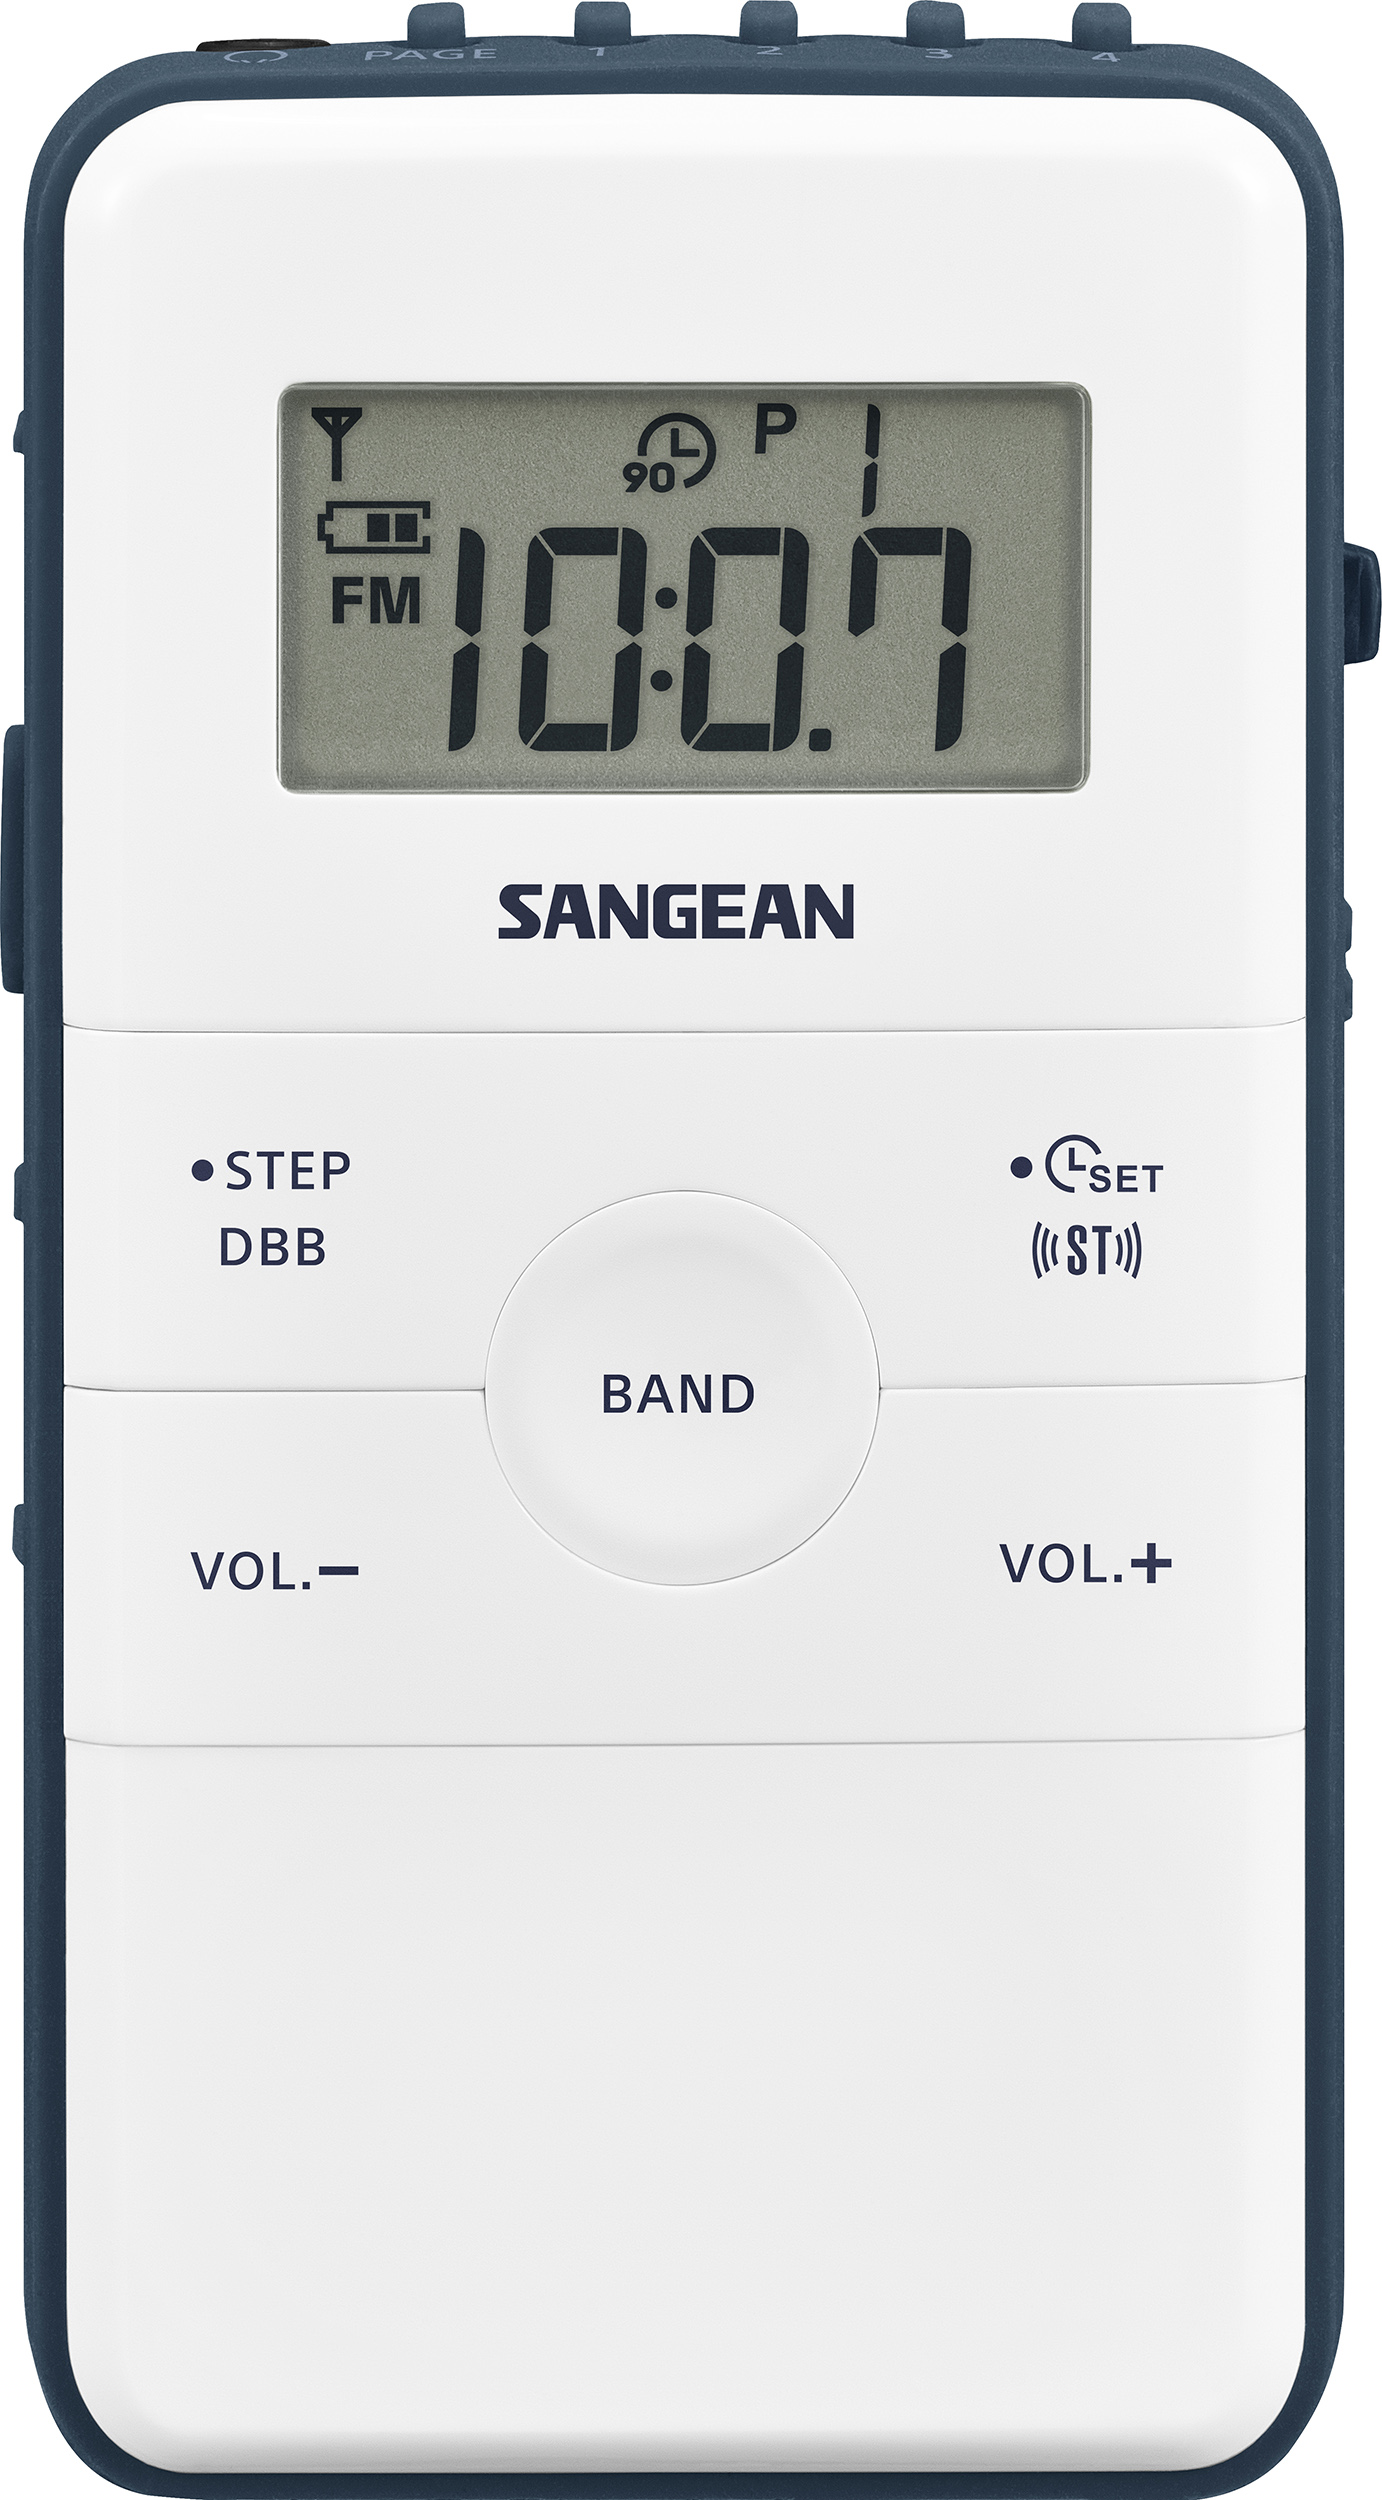 DT-140 (POCKET140), pocket radio FM/AM, rechargeable, white/blue